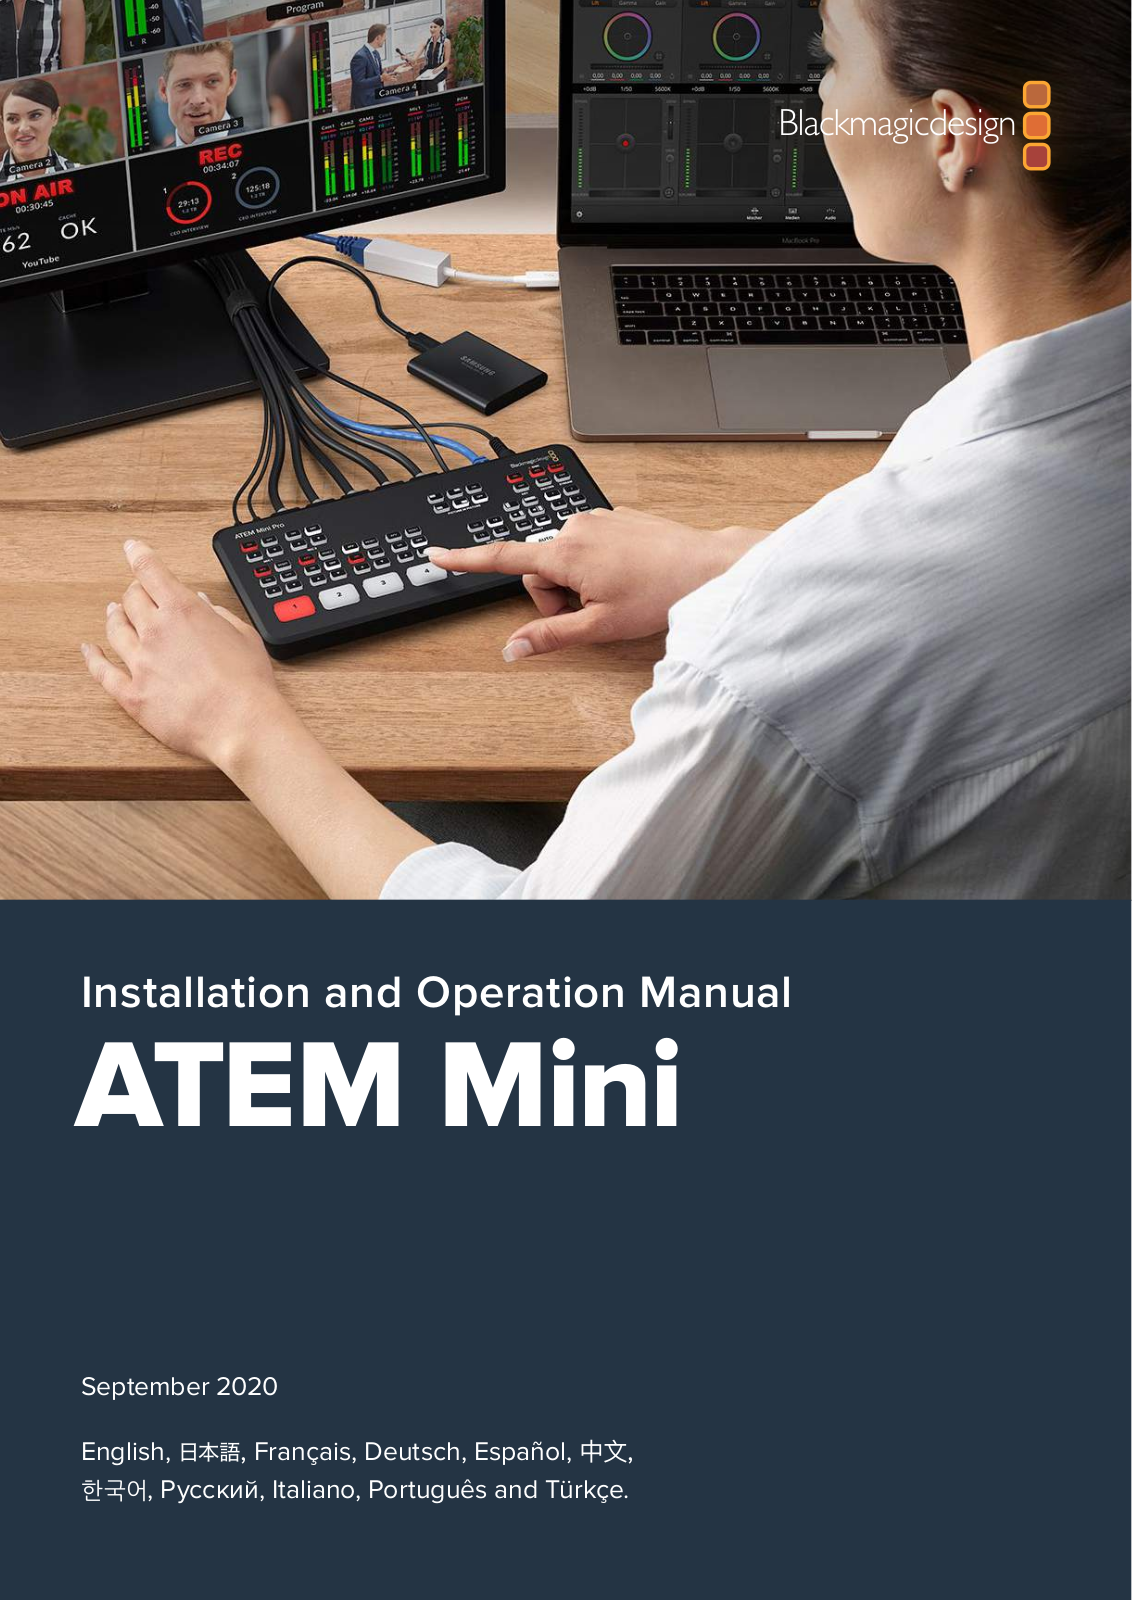 Blackmagic Design Atem Mini Installation and Operation Manual